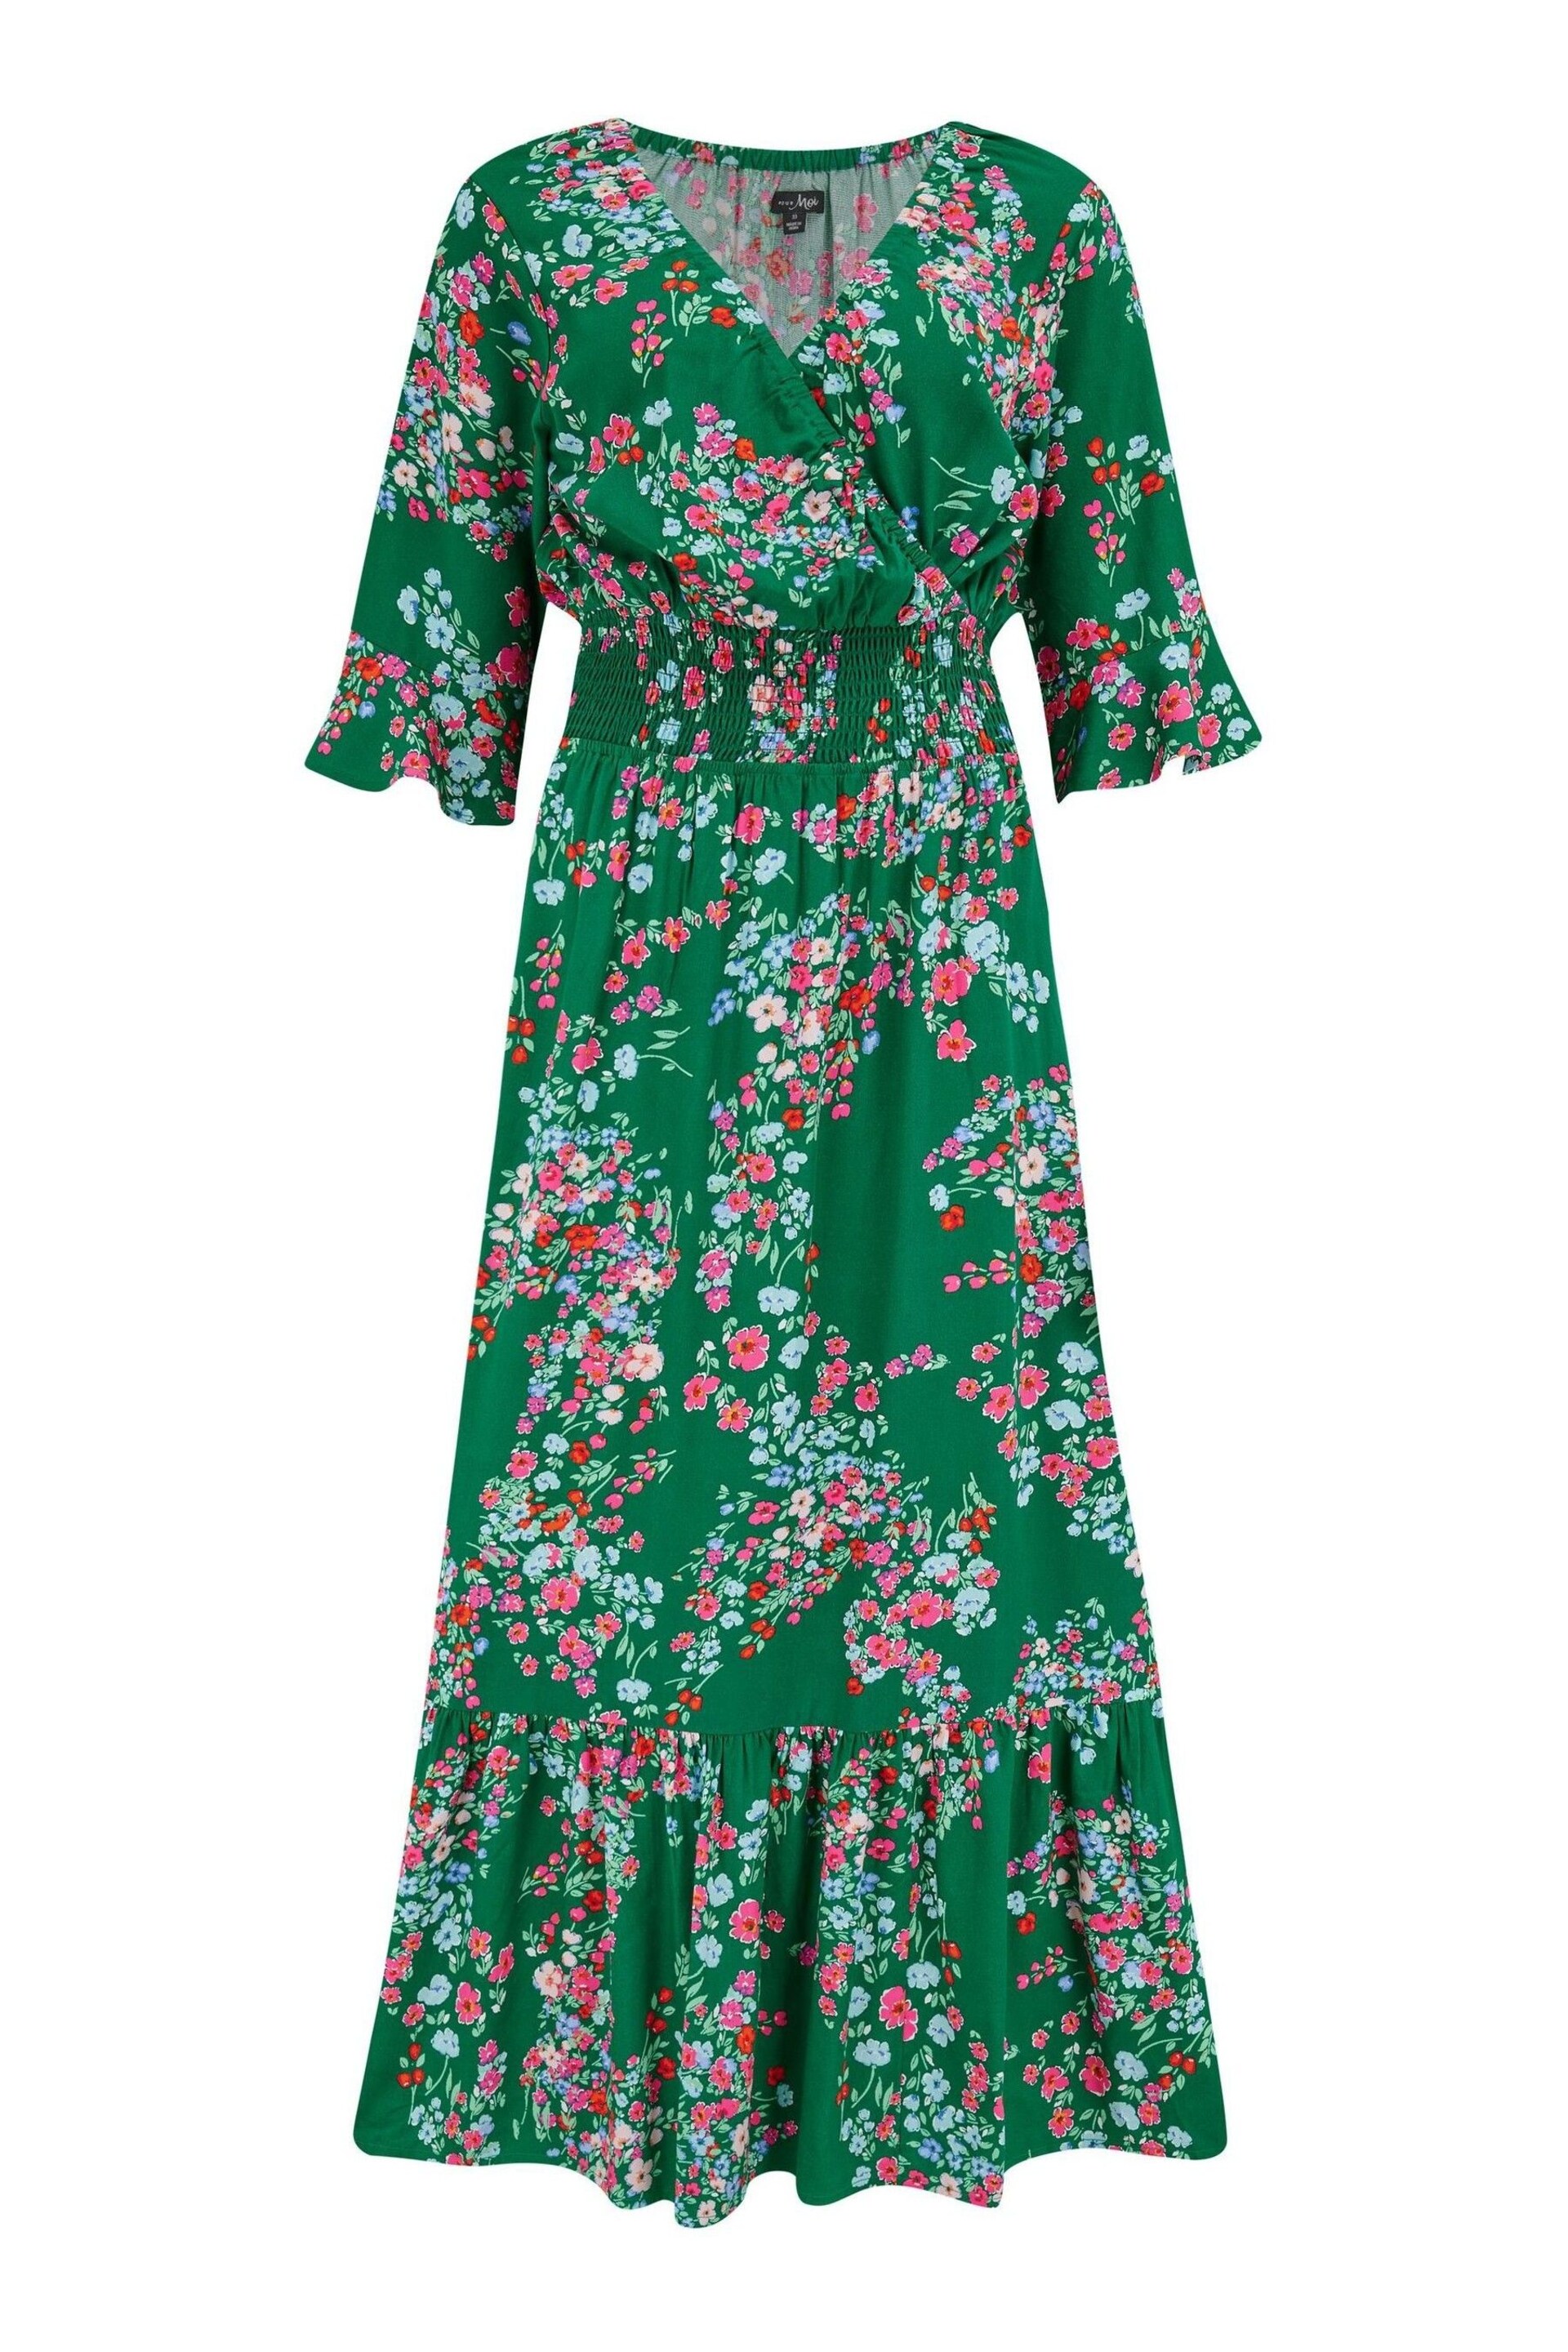 Pour Moi Green Multi Floral Carmen Fuller Bust LENZING™ ECOVERO™ Viscose Elasticated Neckline Midaxi Dress - Image 3 of 4